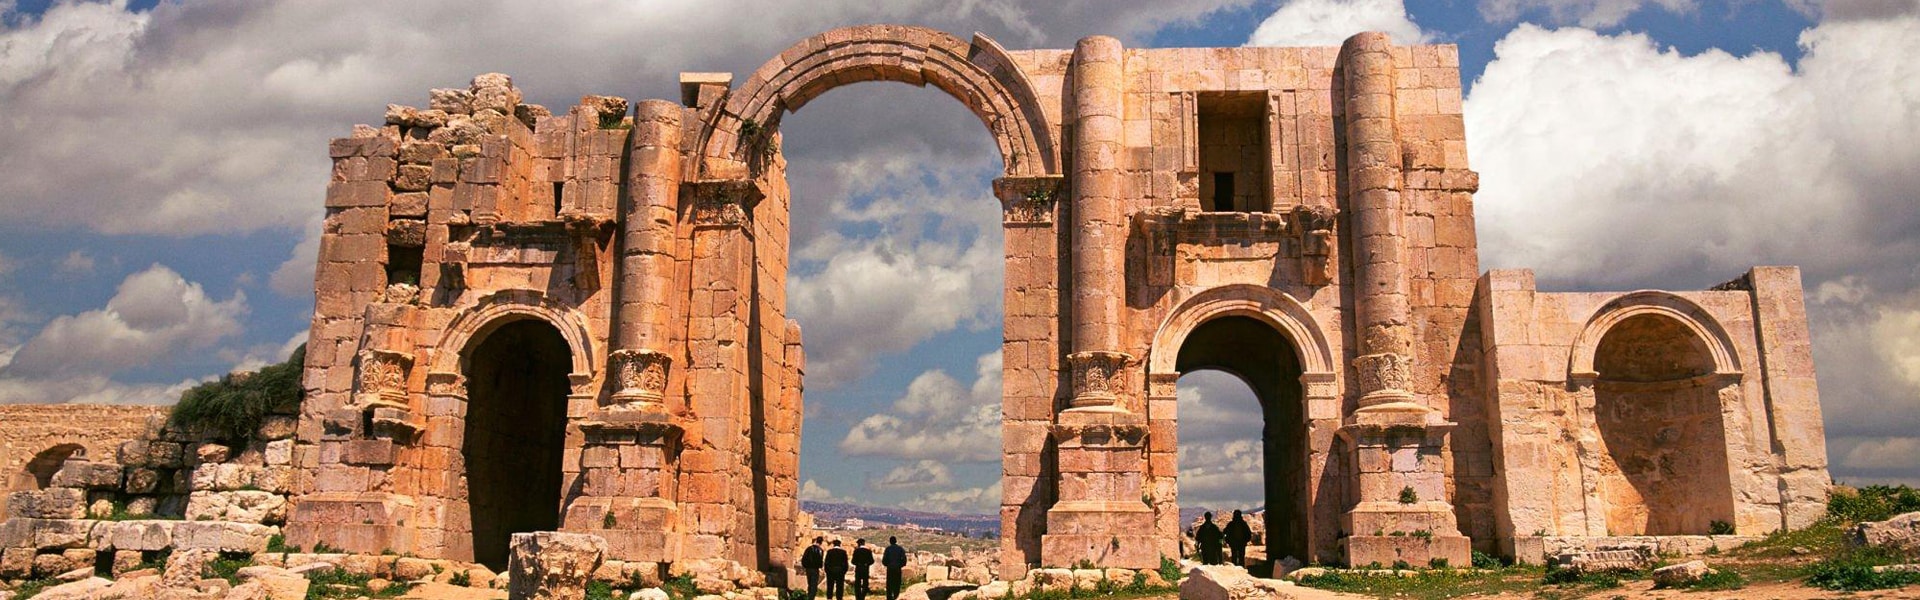 arch of hadrian in jordan